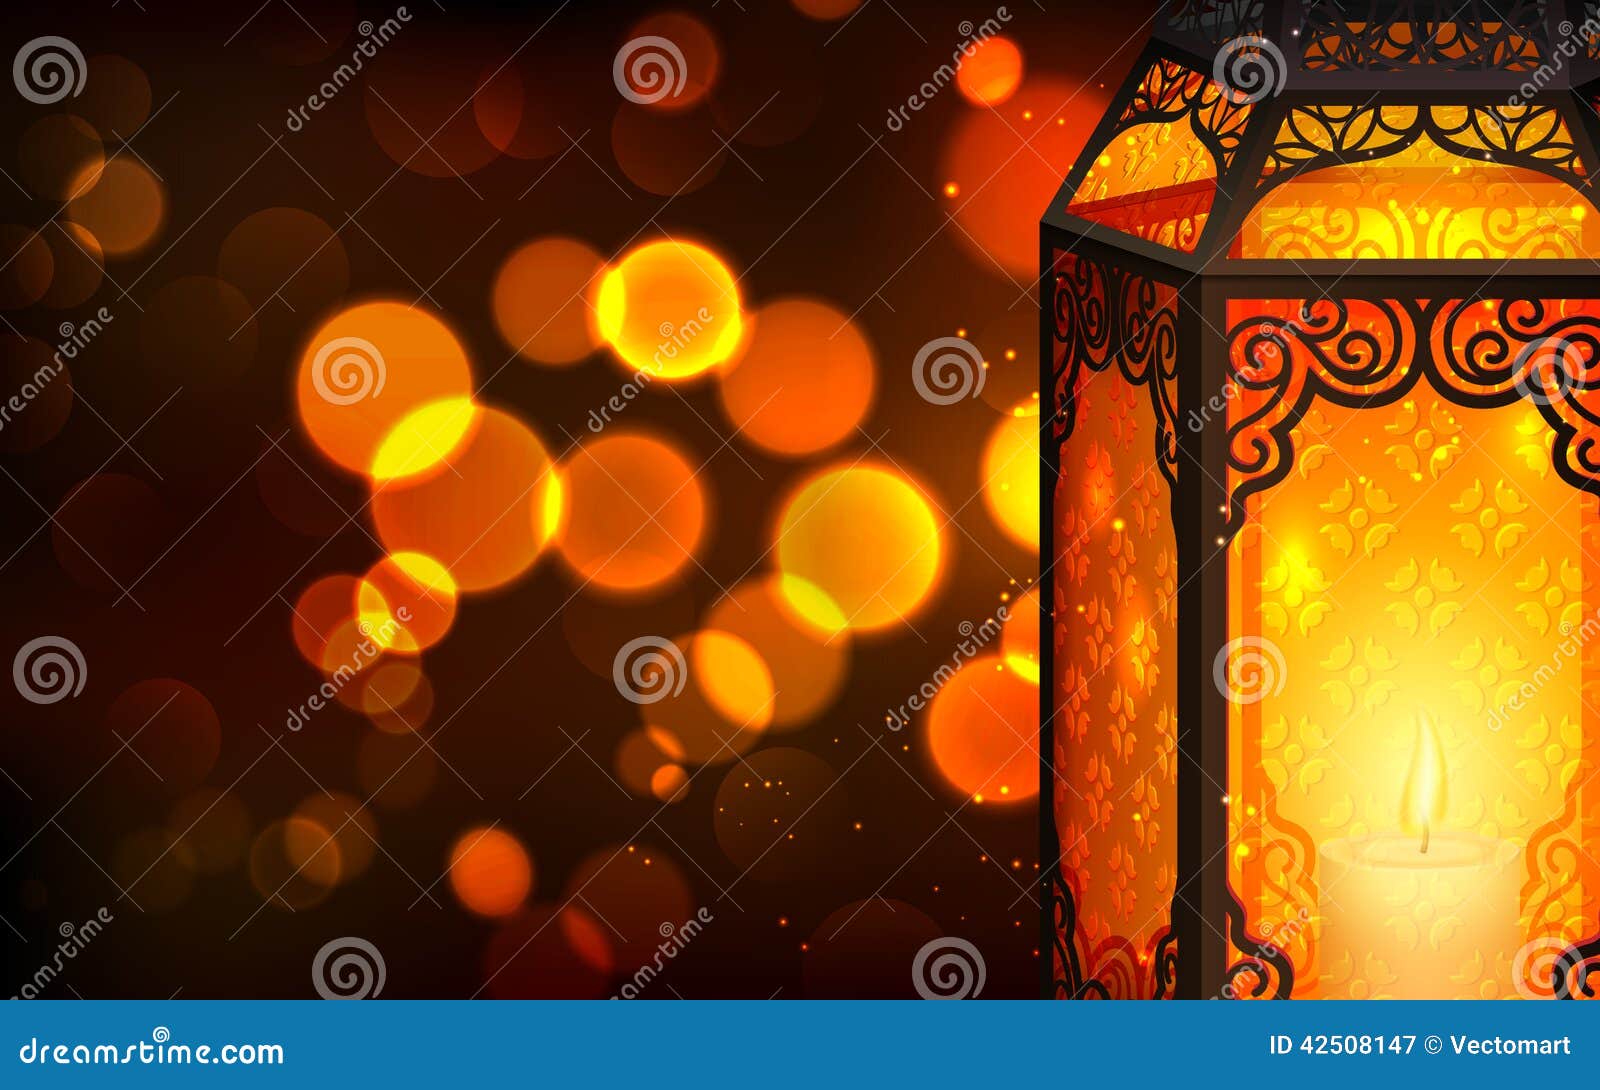 illuminated lamp on eid mubarak (happy eid)